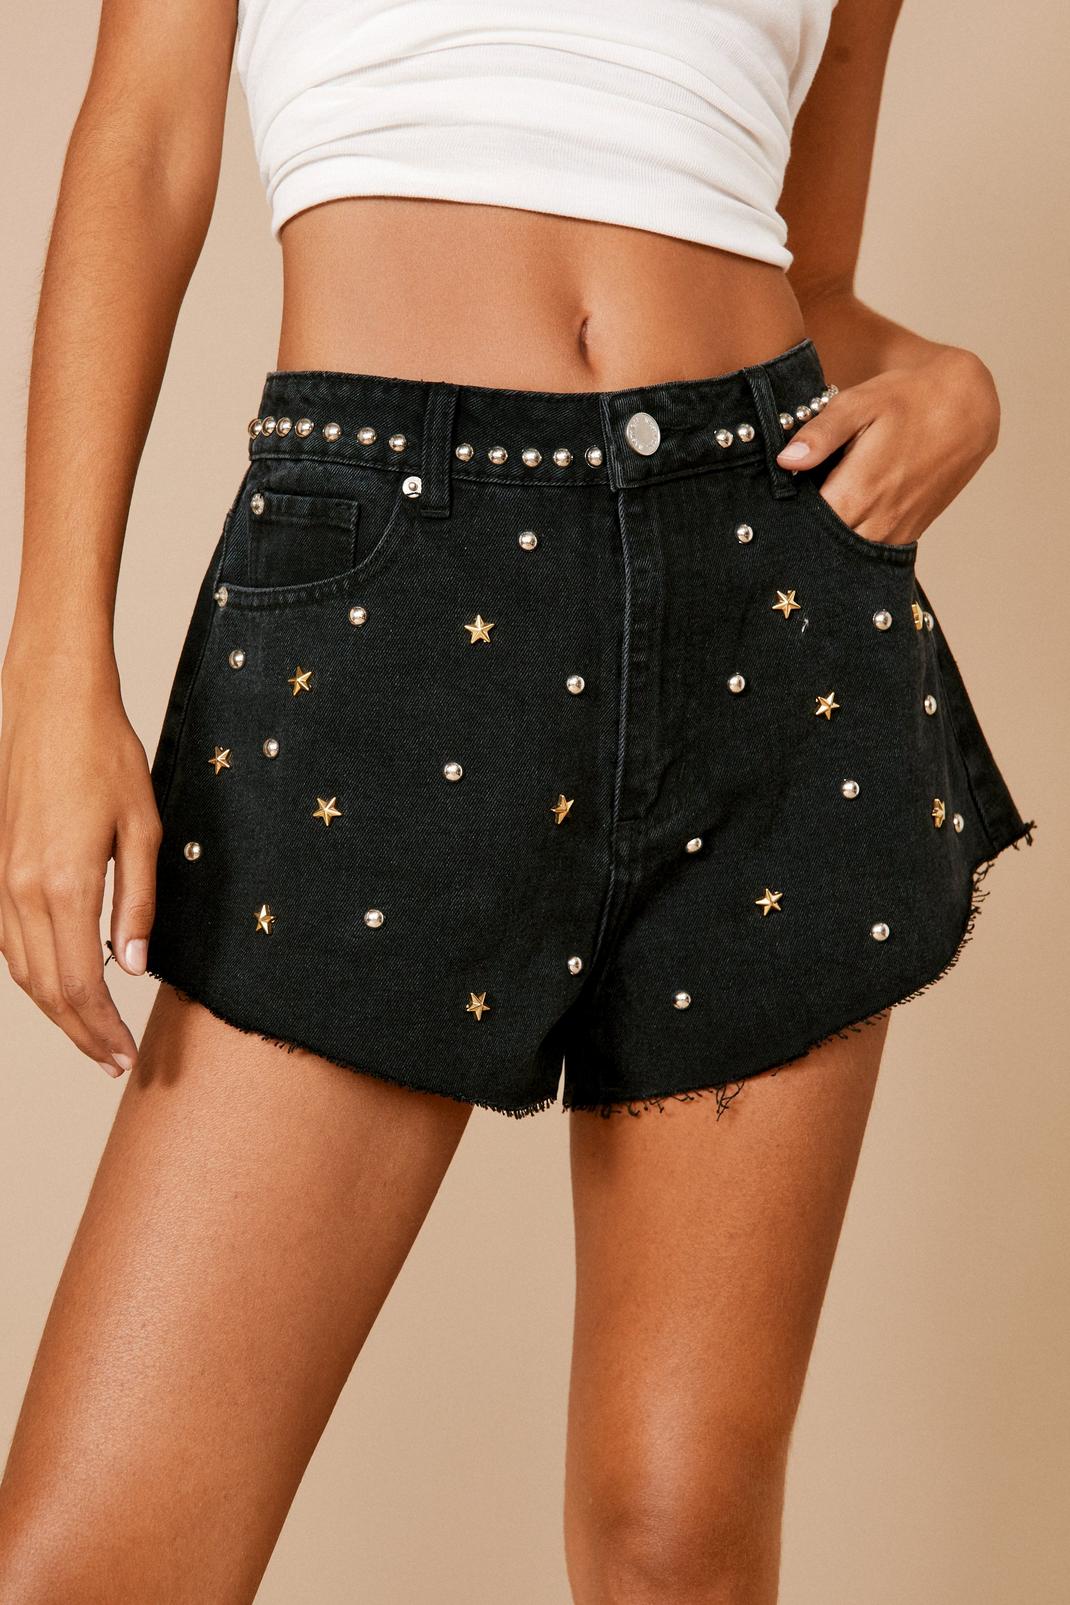 Premium Embellished Star Studded Jean Shorts